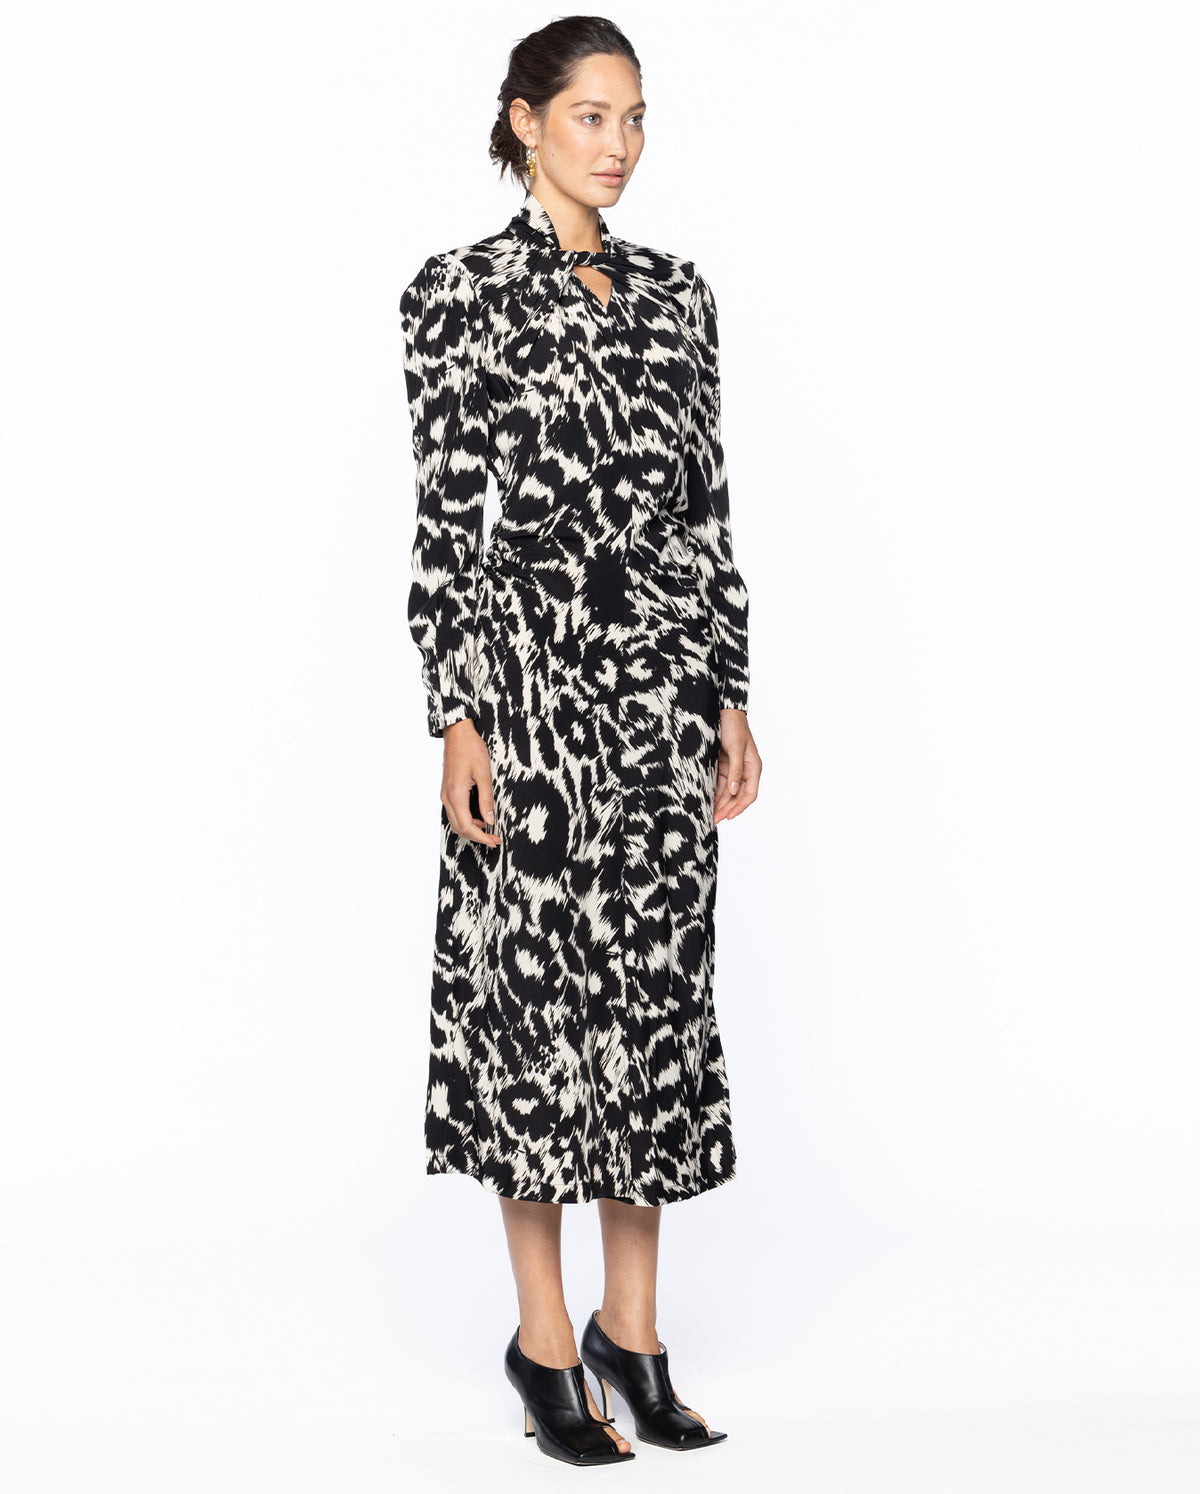 Leopard Print Twisted Dress - Ivory